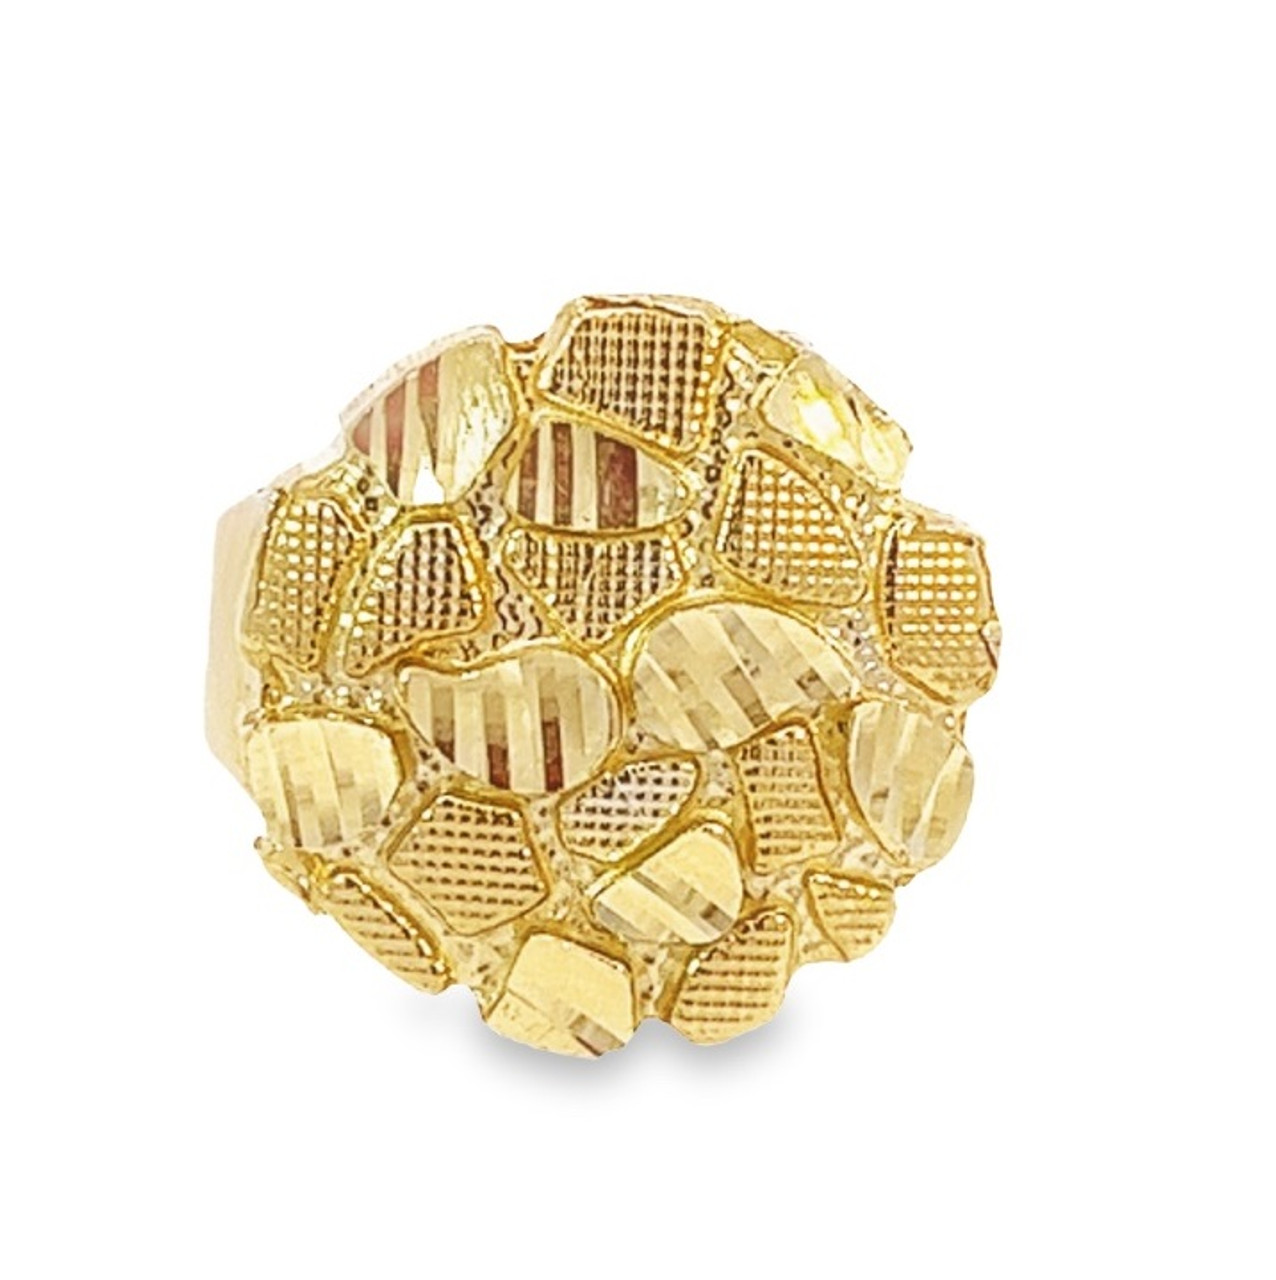 Buy quality 916 gold cz round shape ring in Mumbai